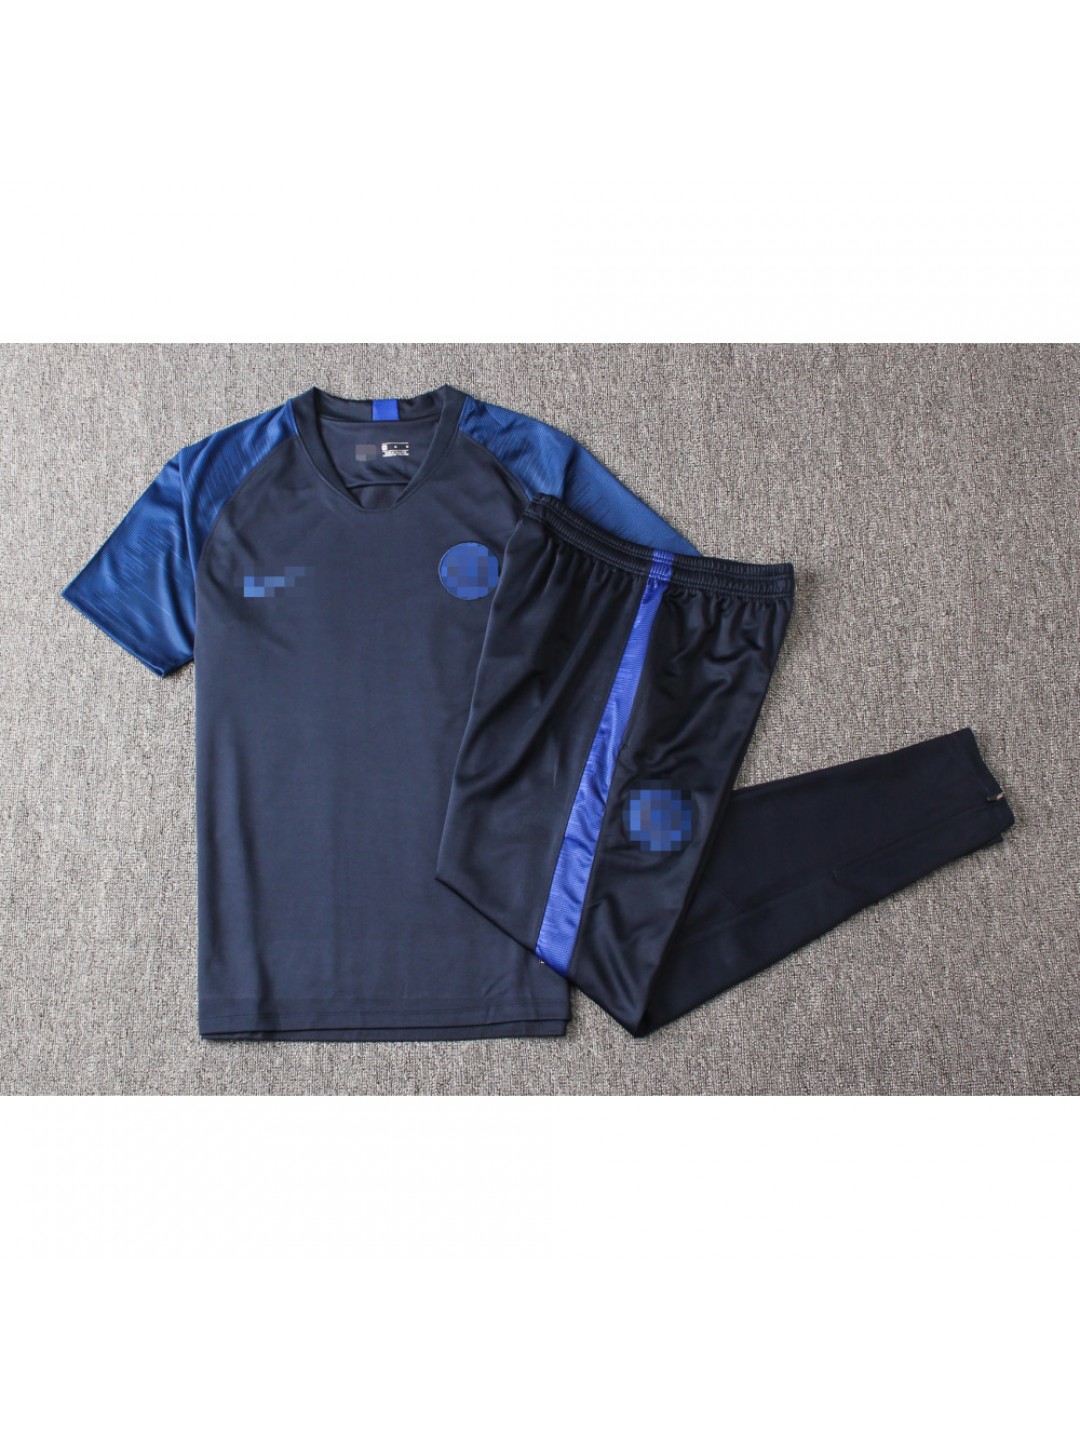 Camiseta de Entrenamiento Chelsea FC 2019/2020 Kit Azul Marino